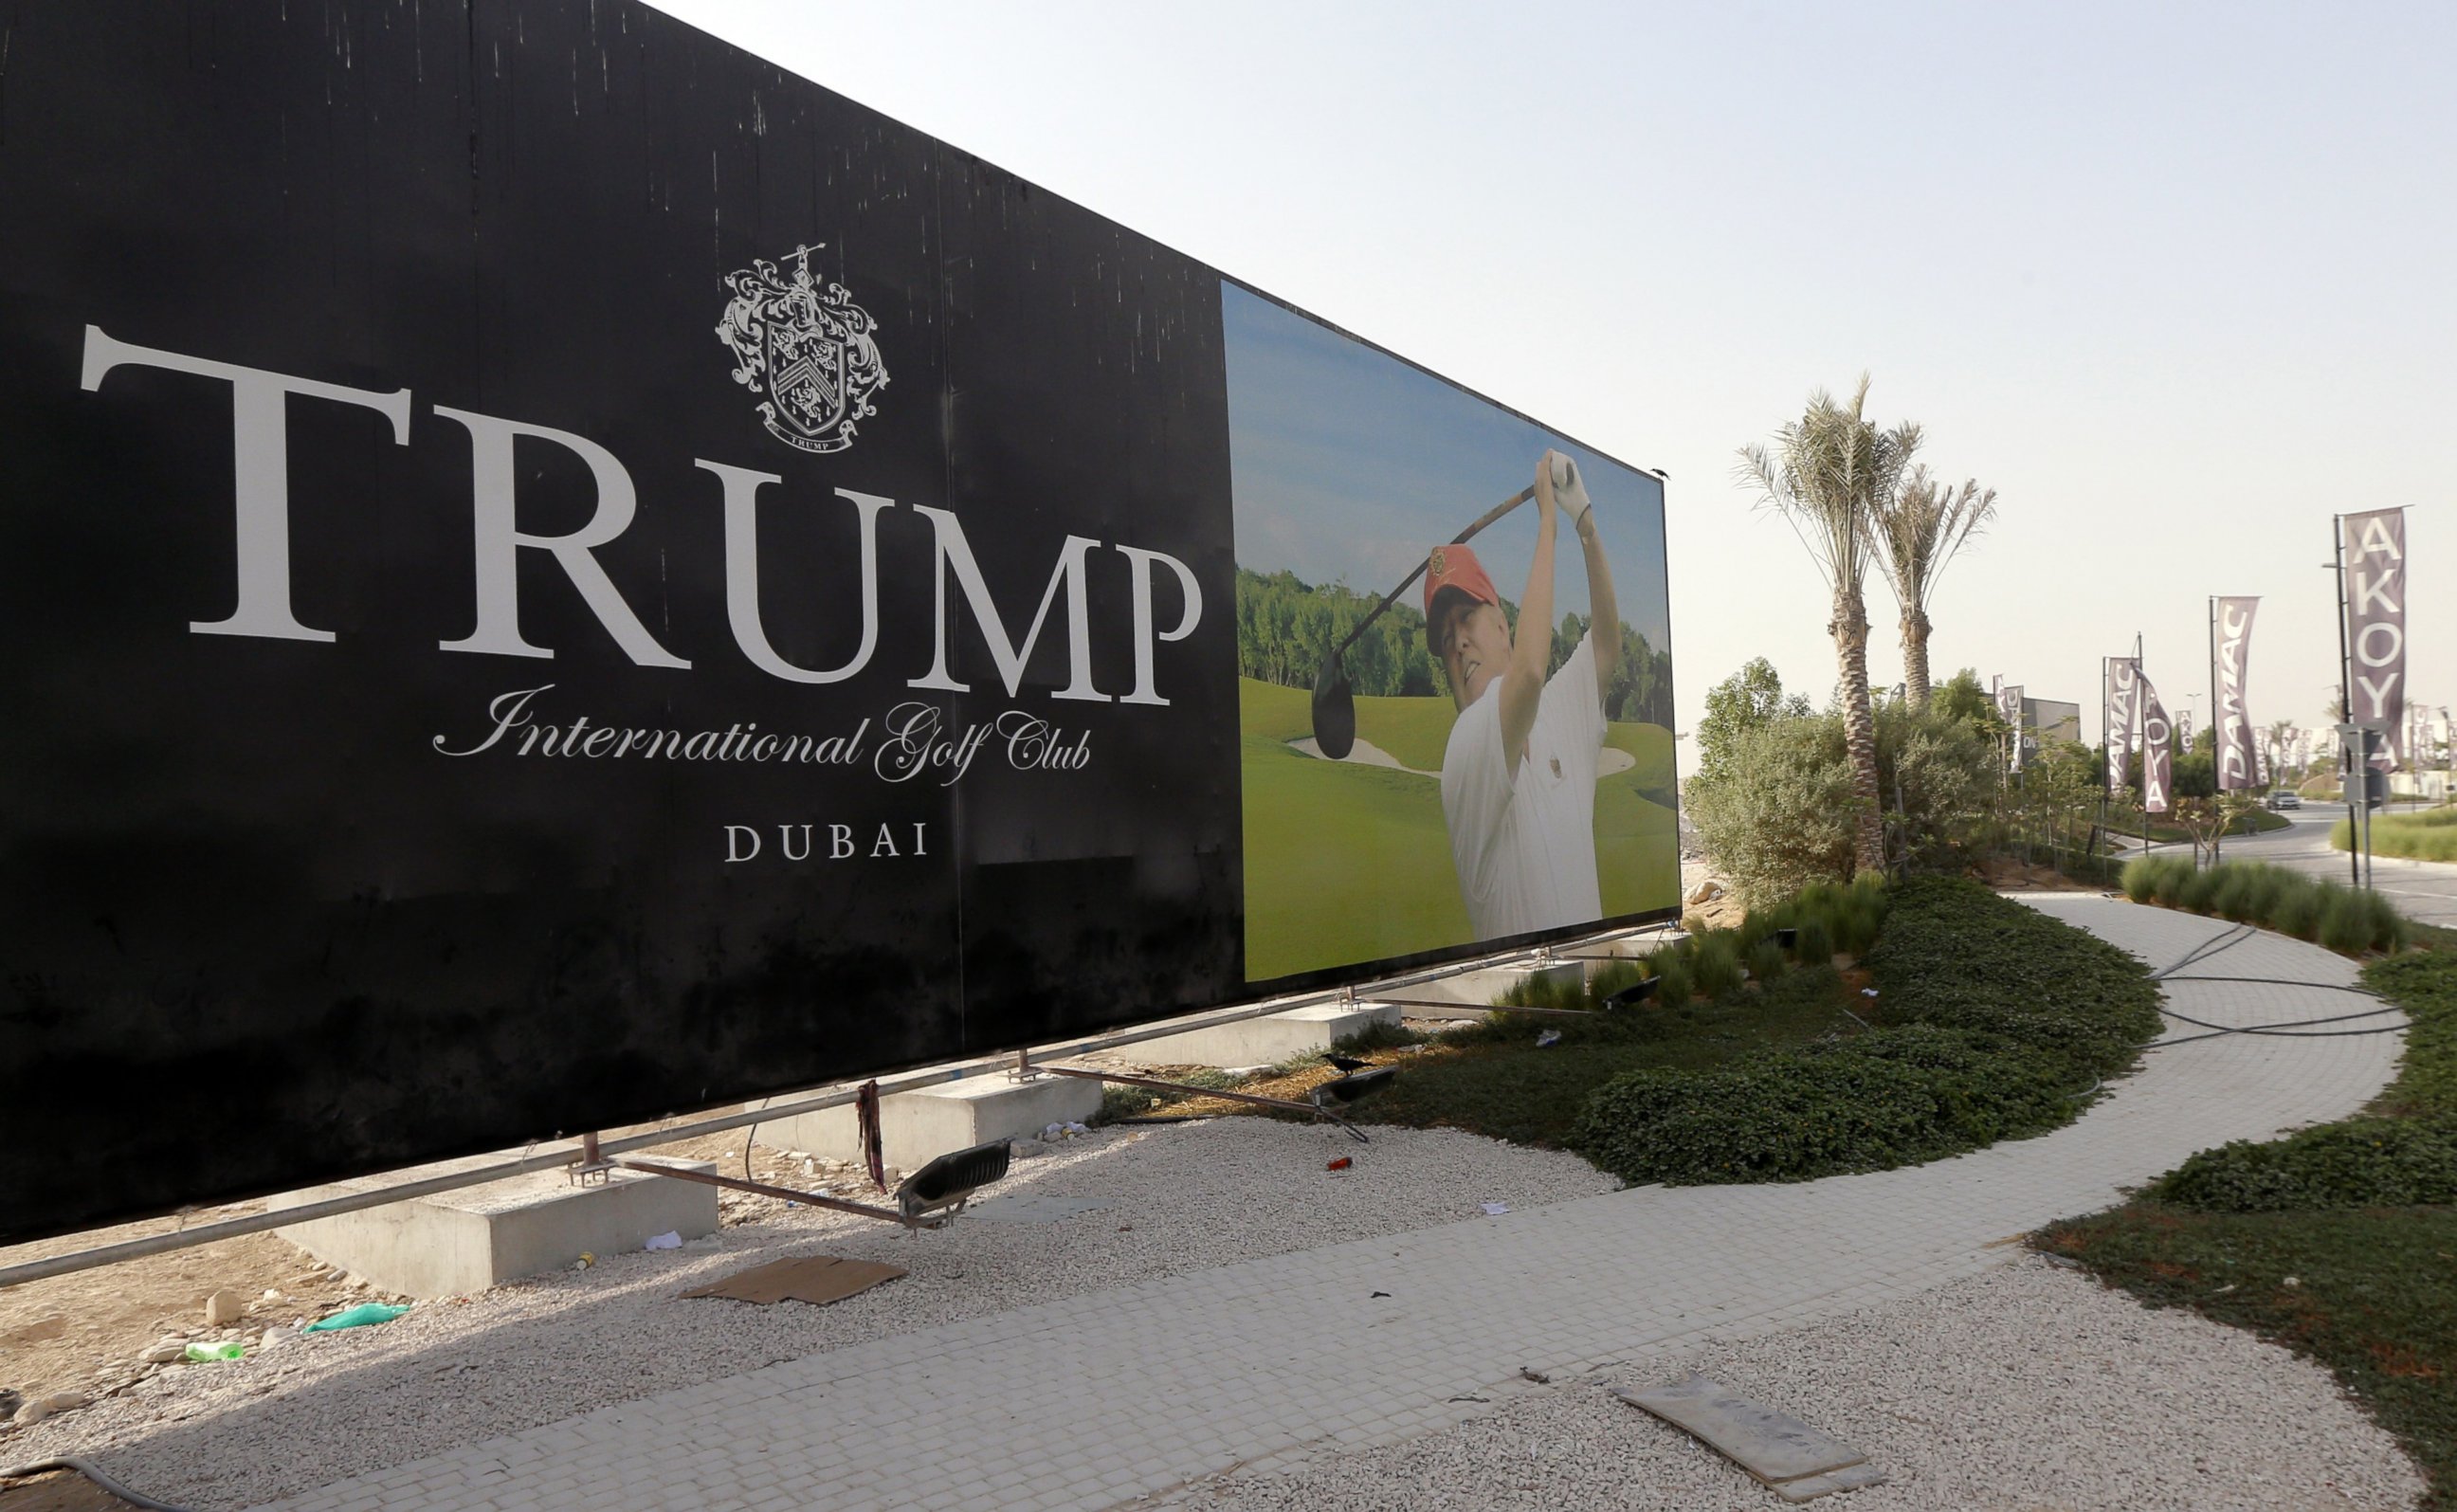 PHOTO: Donald Trump is seen playing golf on a billboard at the Trump International Golf Club Dubai in the United Arab Emirates, Aug. 12, 2015.